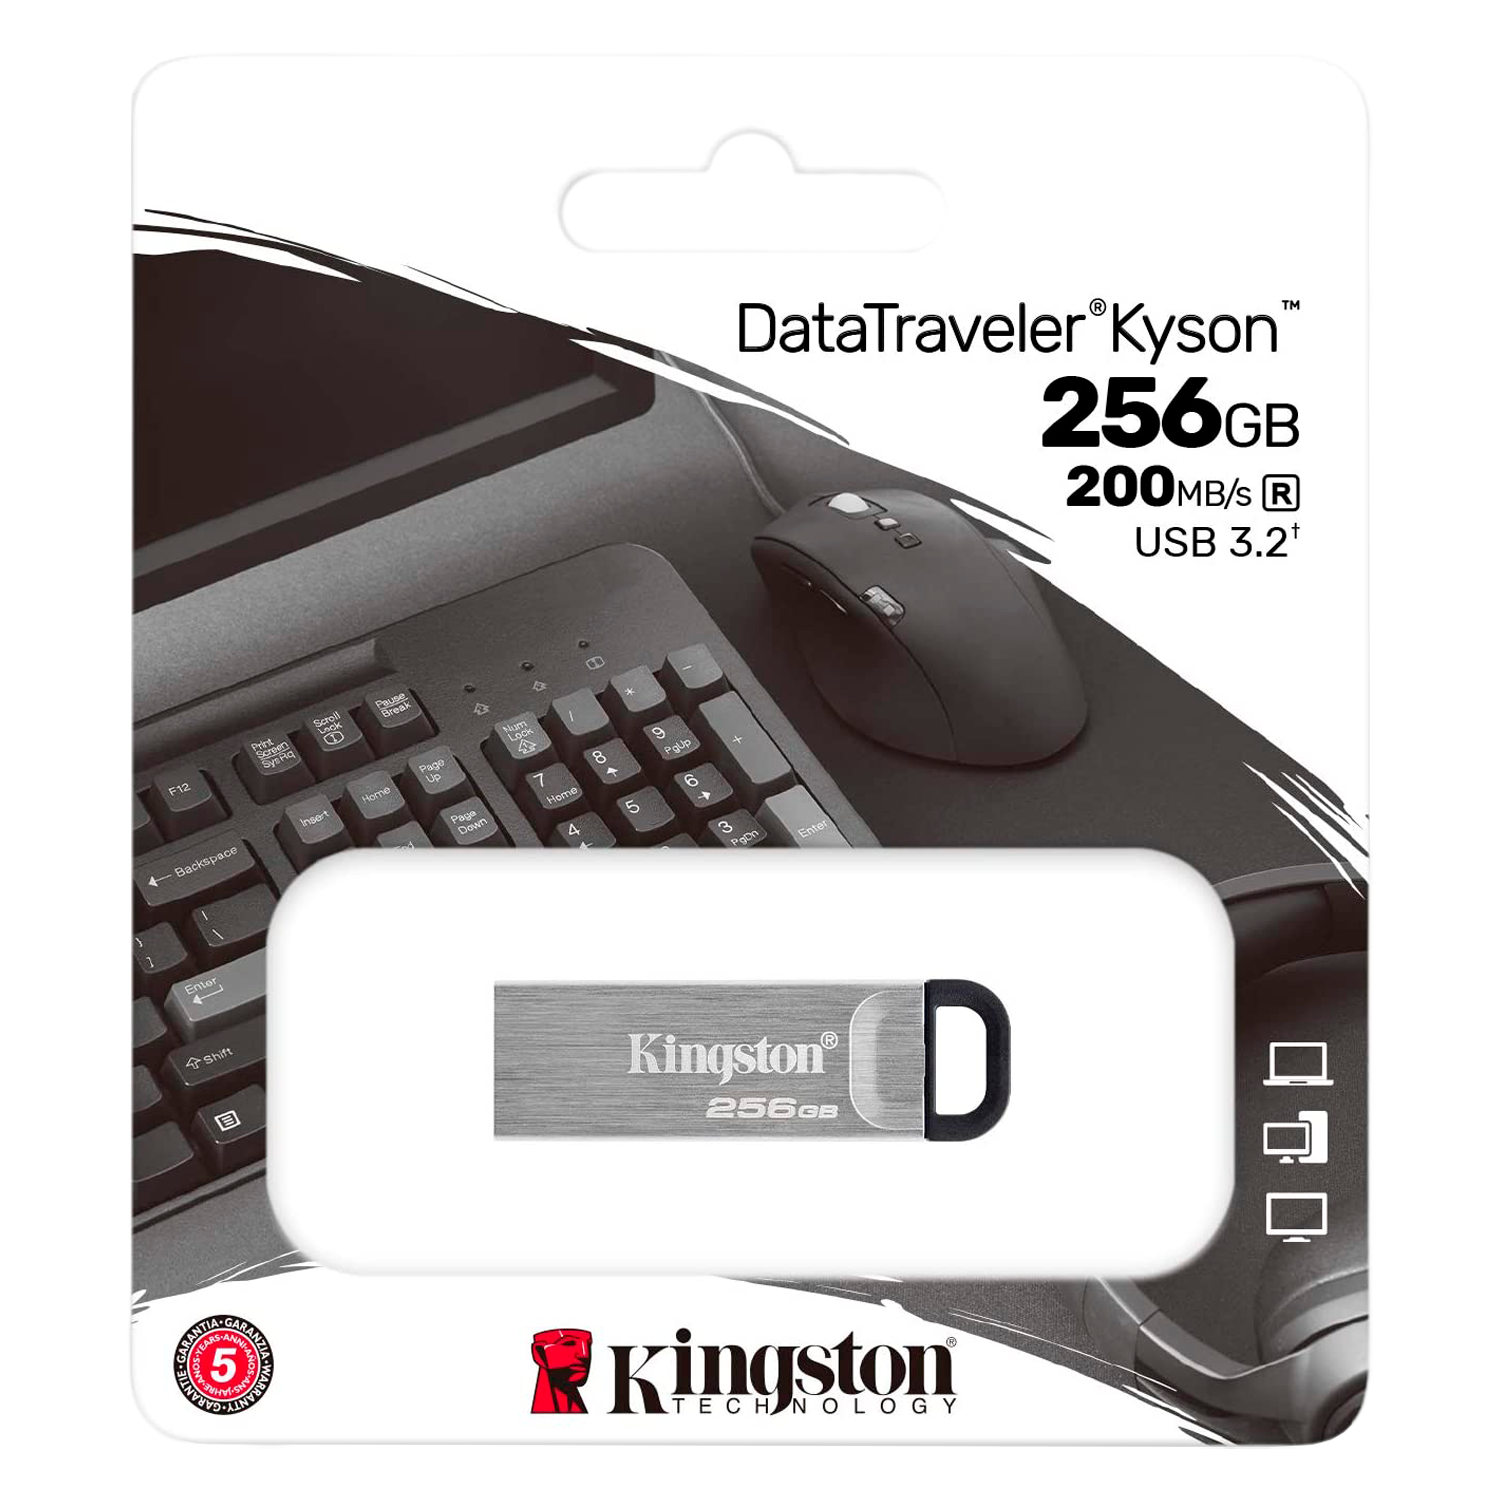 Pendrive Kingston 256GB USB 3.2 DaTatraveler Kyson - Silver (DTKN/256GB)